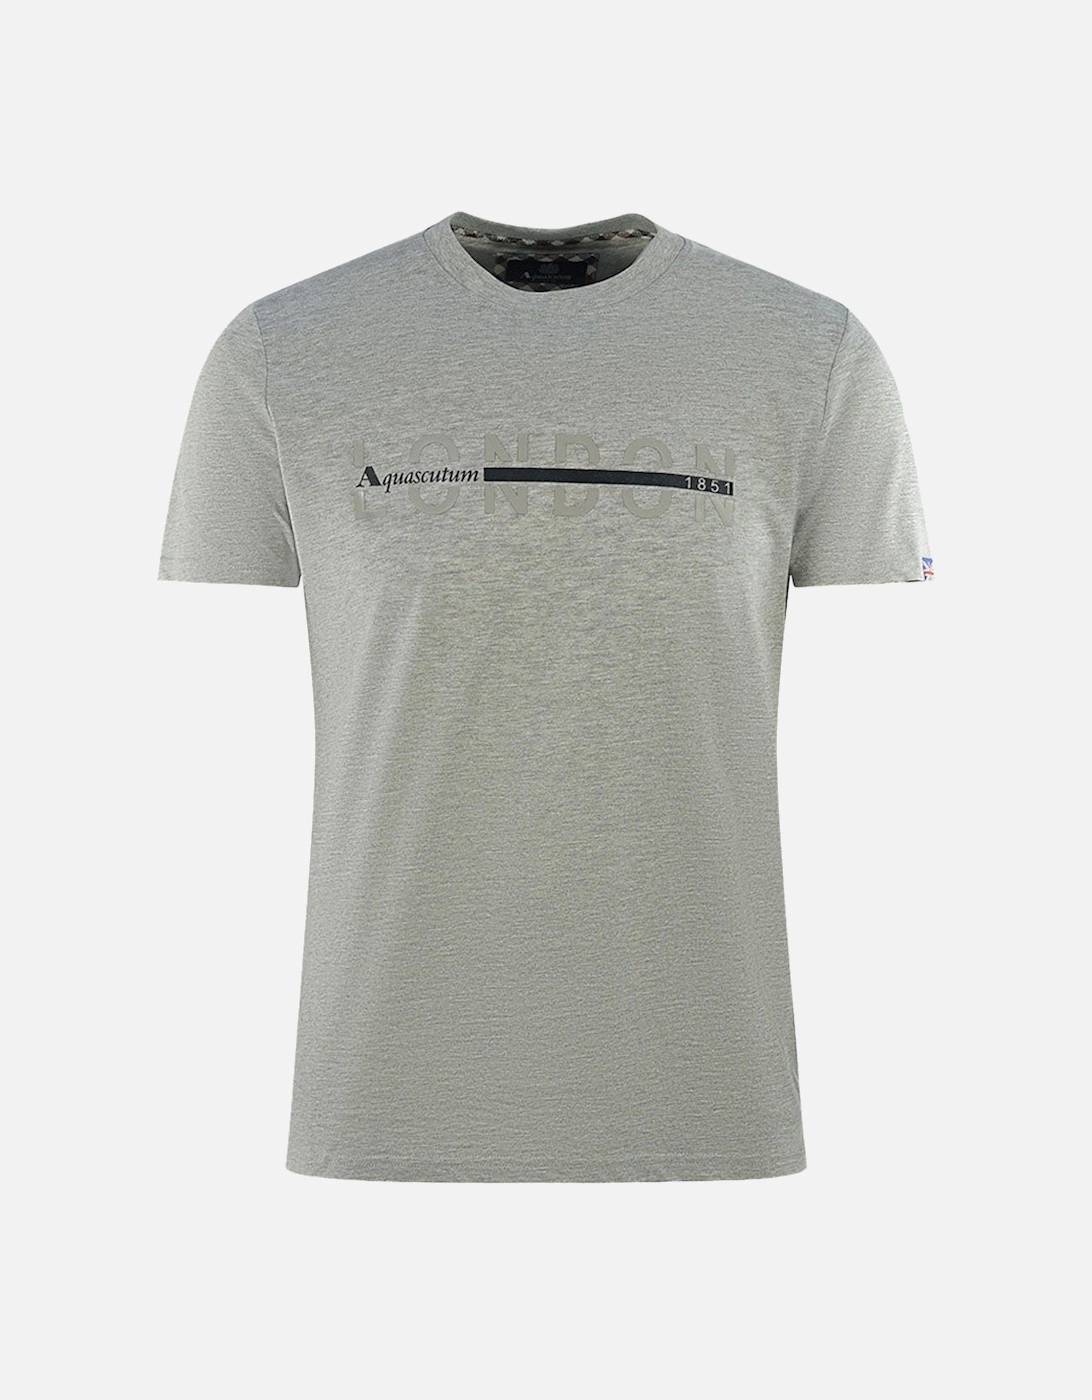 London 1851 Split Logo Grey T-Shirt, 4 of 3